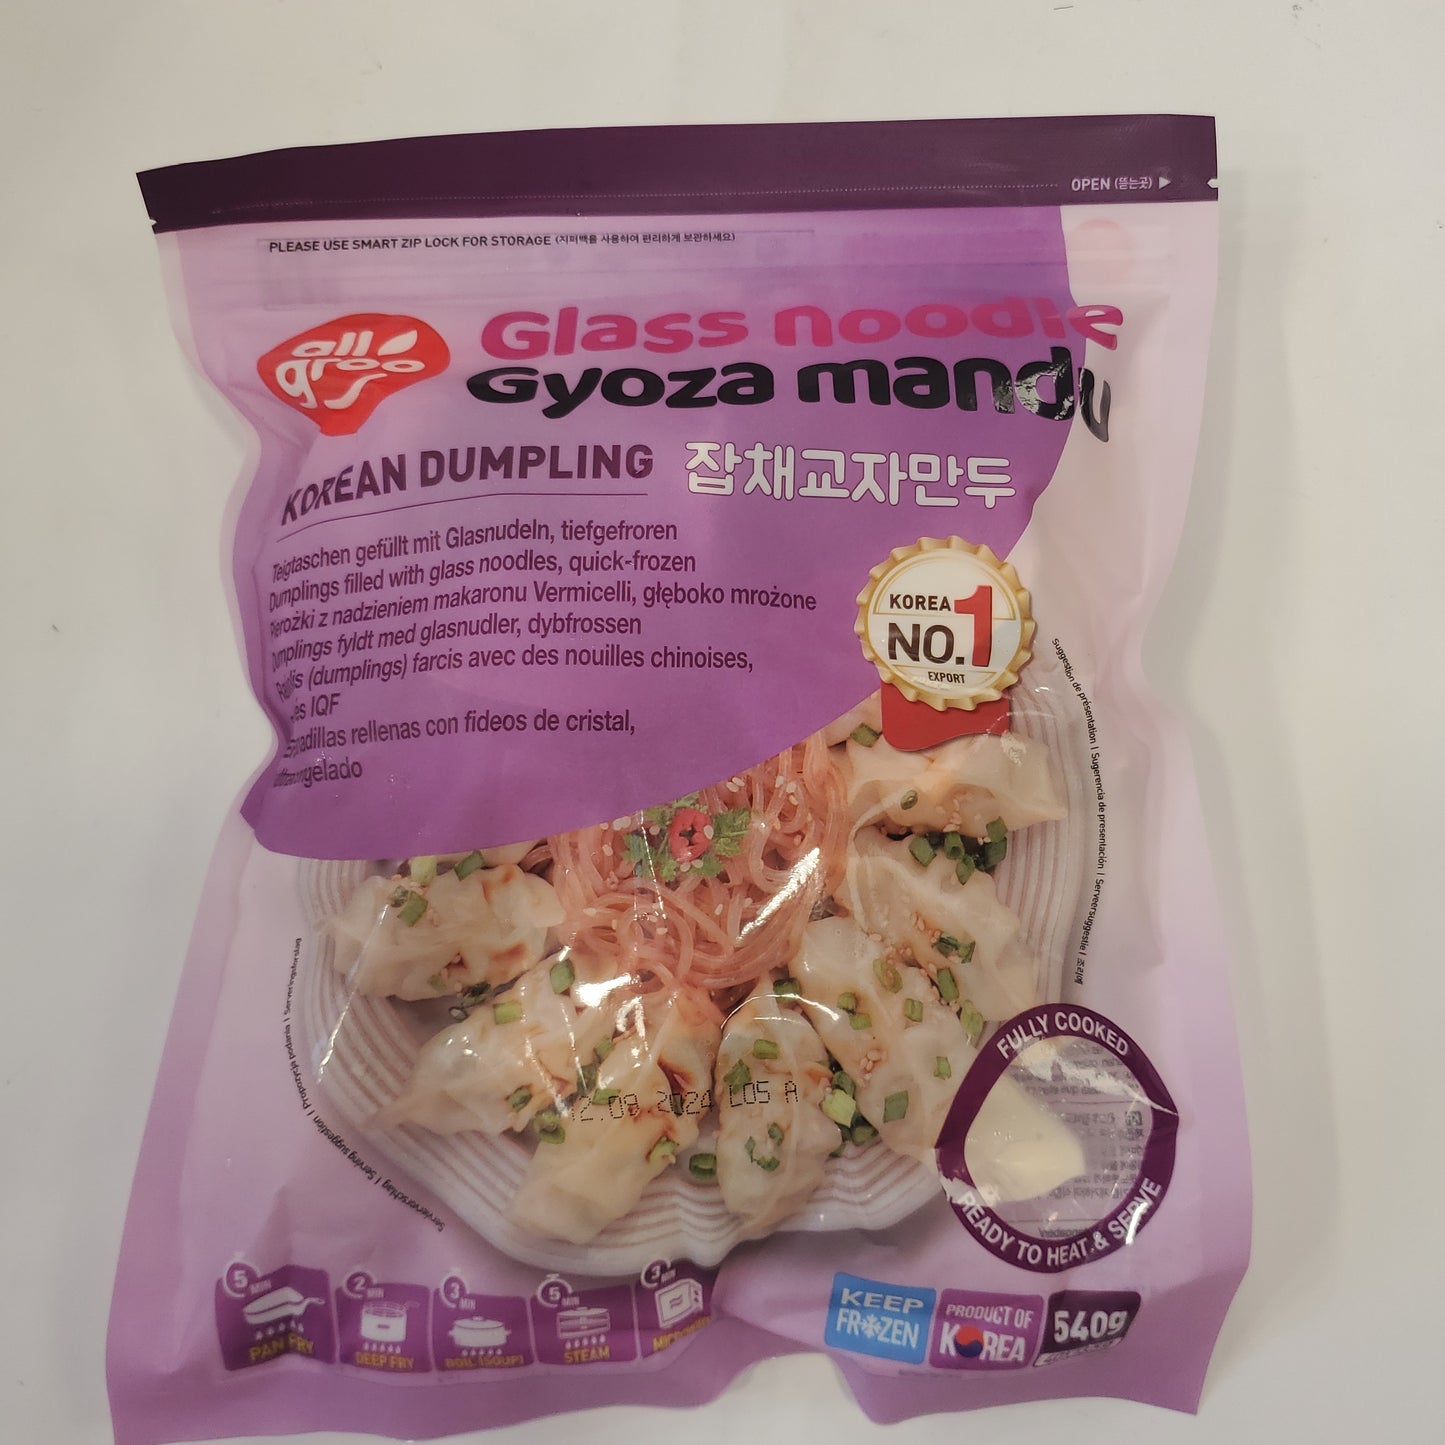 Glass Noodle Gyoza (Dumpling) 540g